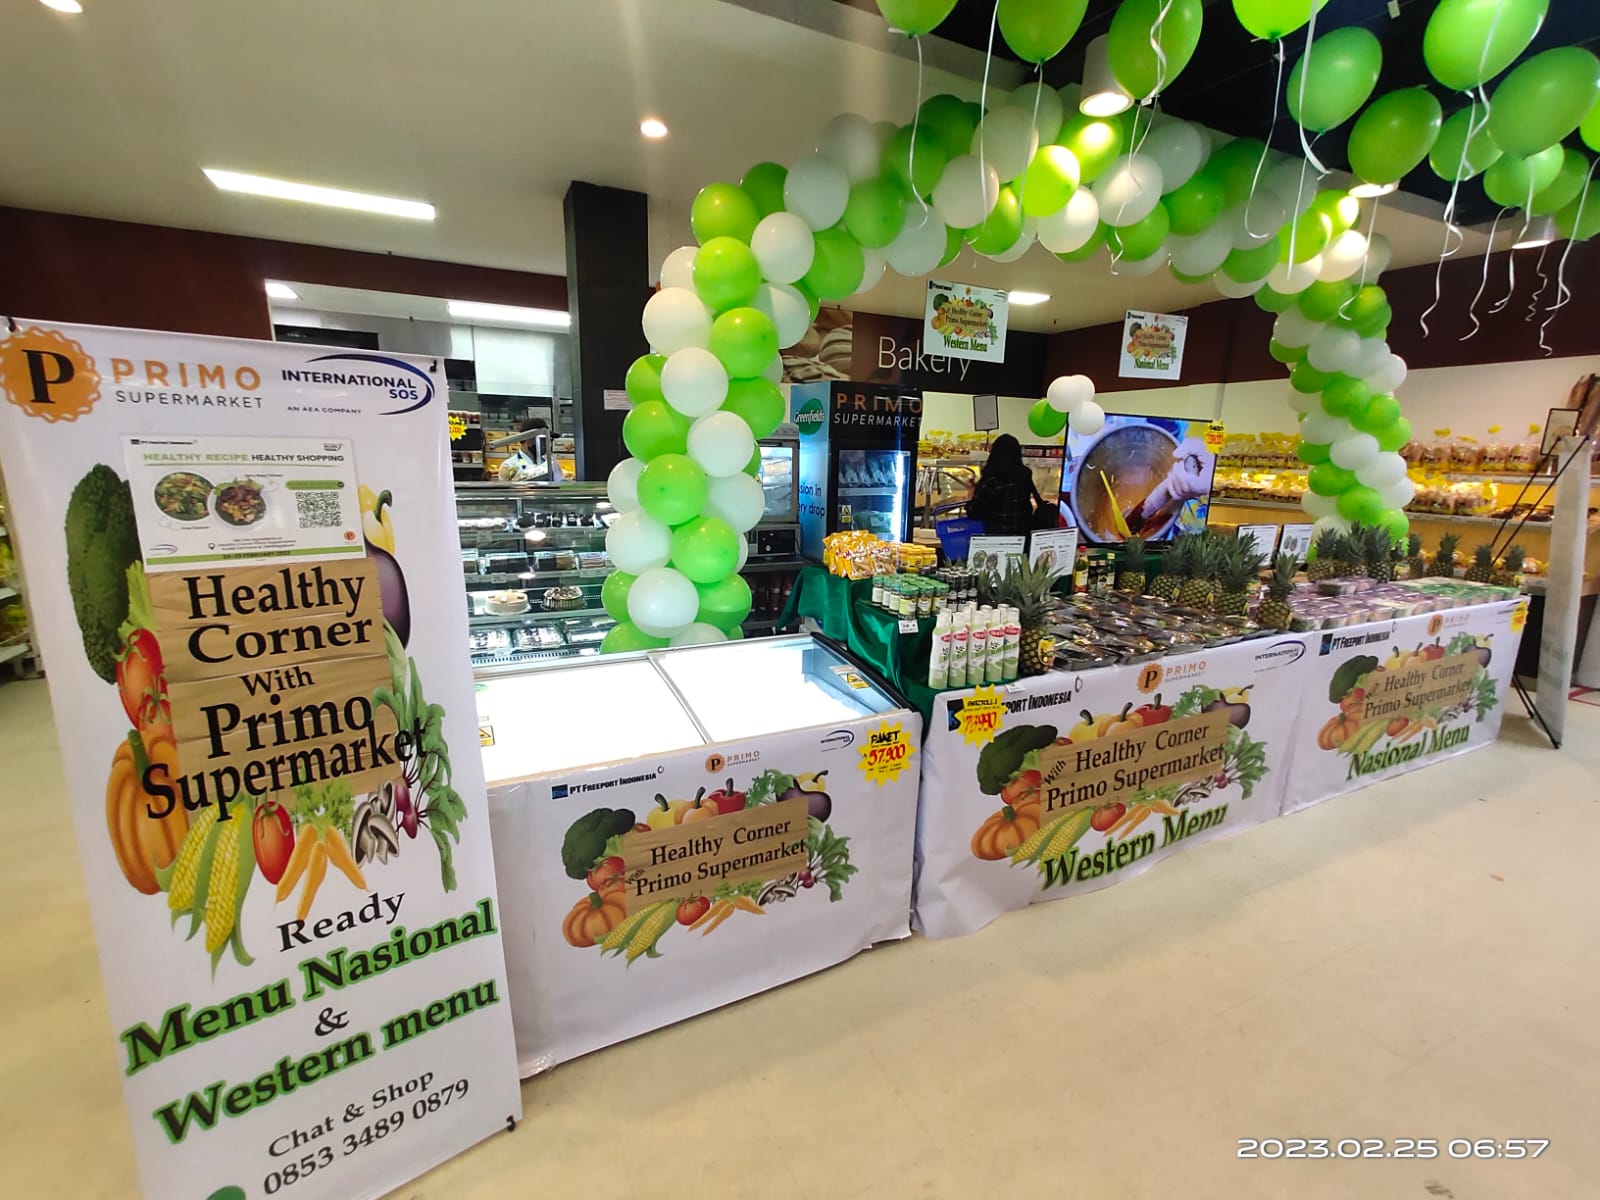 Healthy Food Corner at Primo